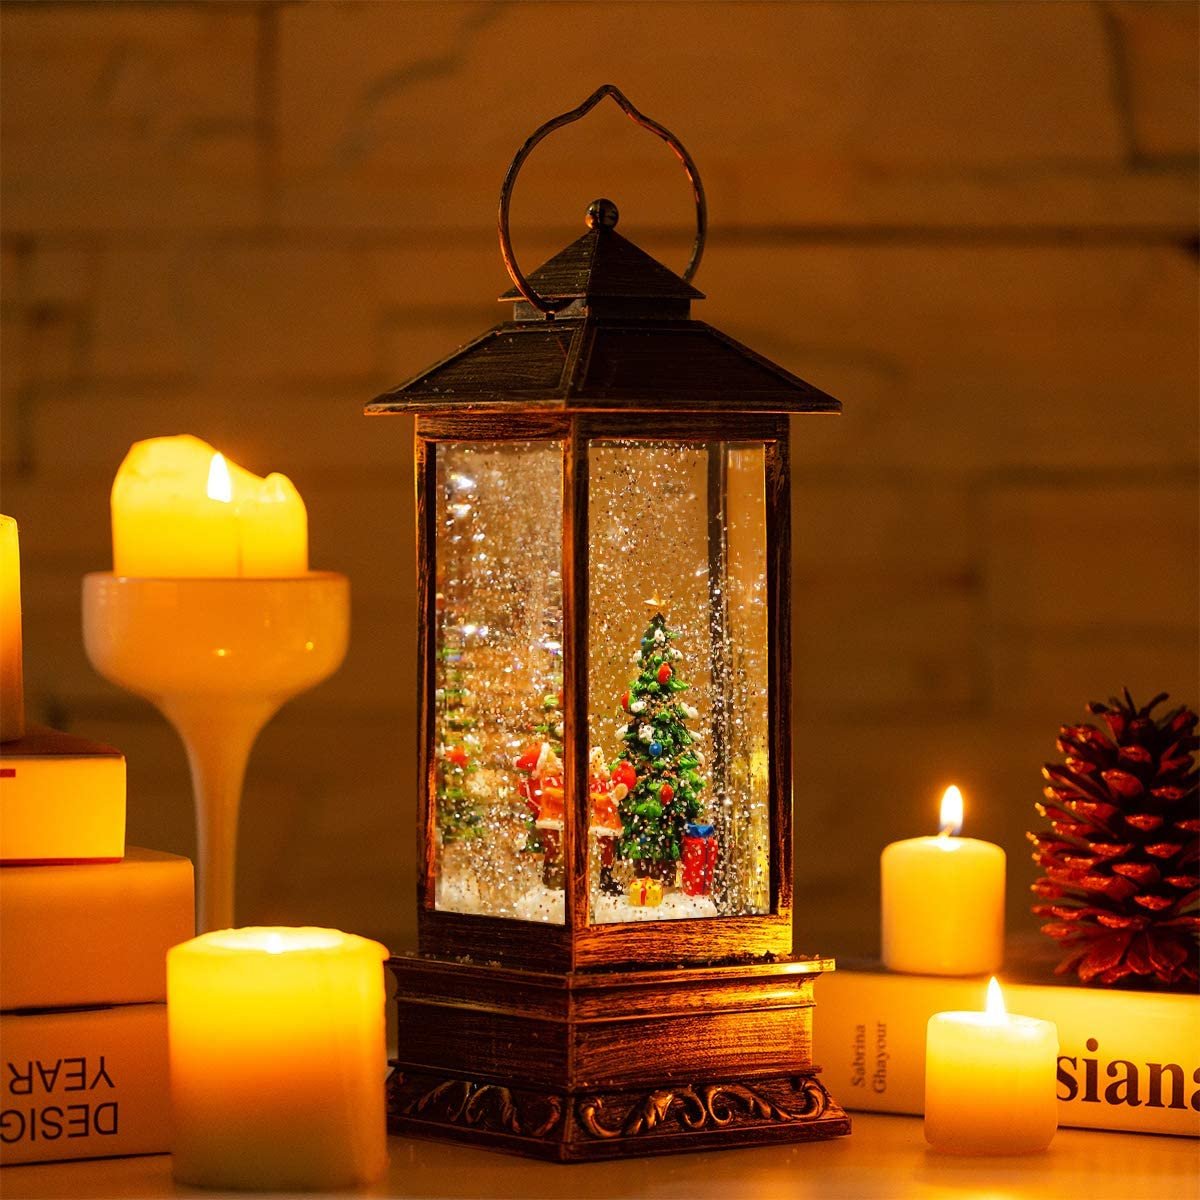 (🌲Early Christmas Sale- SAVE 48% OFF) Snow Globe Christmas Lantern Decorations